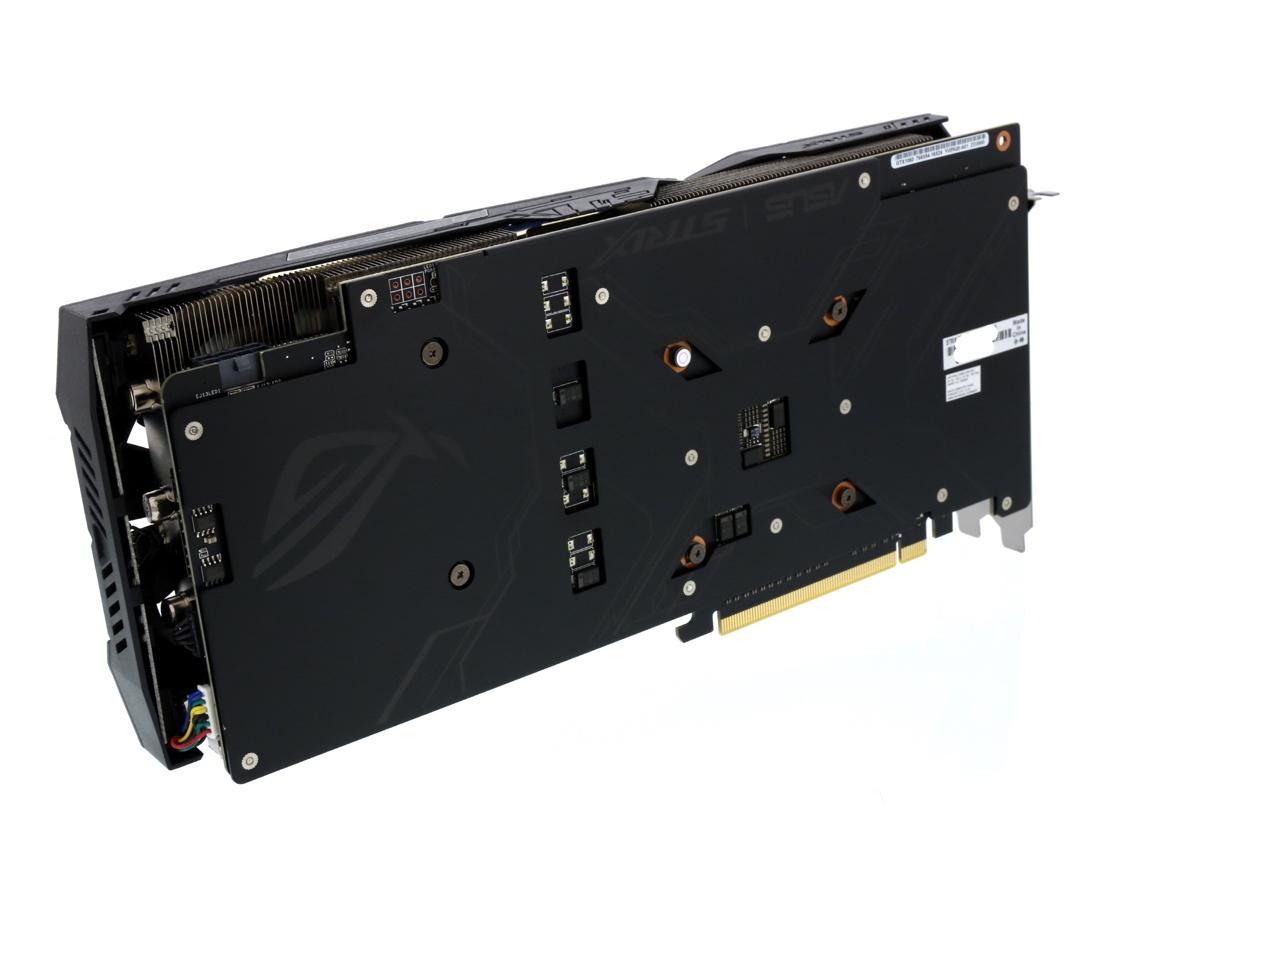 ASUS ROG GeForce GTX 1060 6GB GDDR5 PCI Express 3.0 Video Card  STRIX-GTX1060-O6G-GAMING